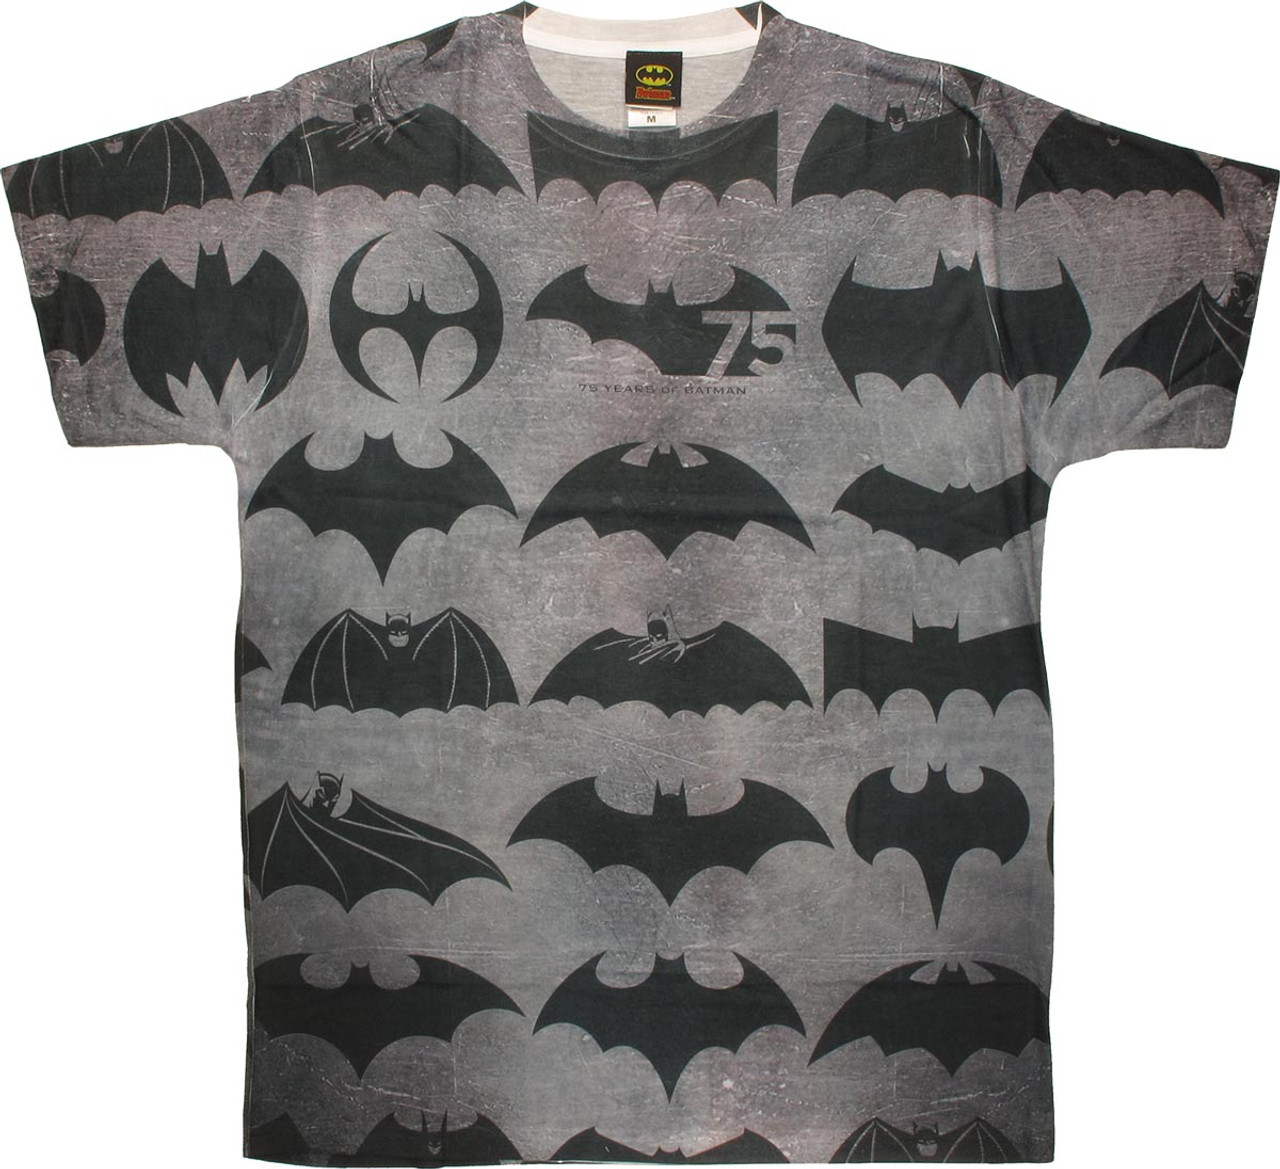 Batman 75 Years Logos Two Side Sublimated T Shirt Sheer